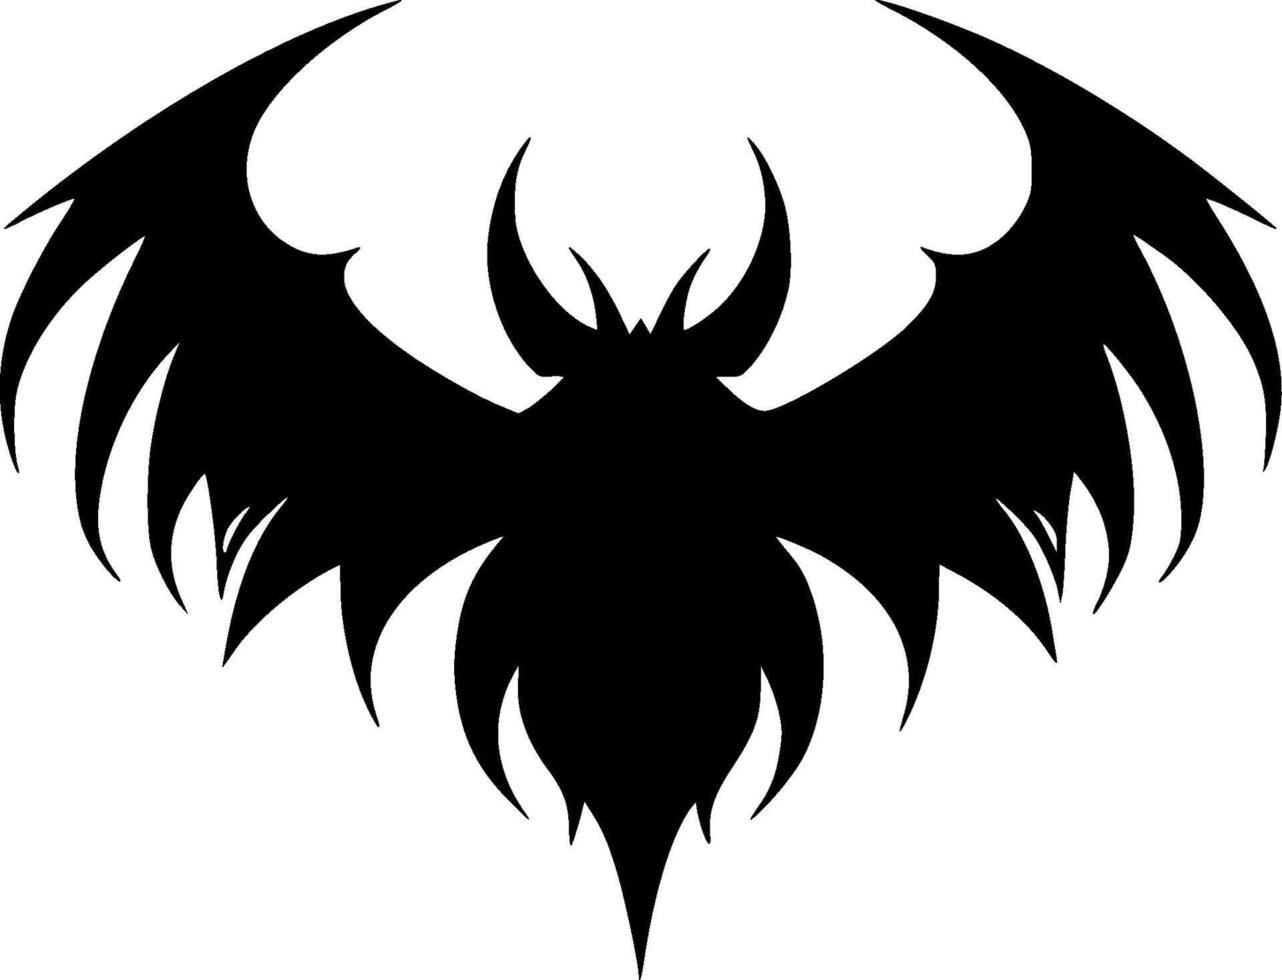 Bat - Minimalist and Flat Logo - Vector illustration